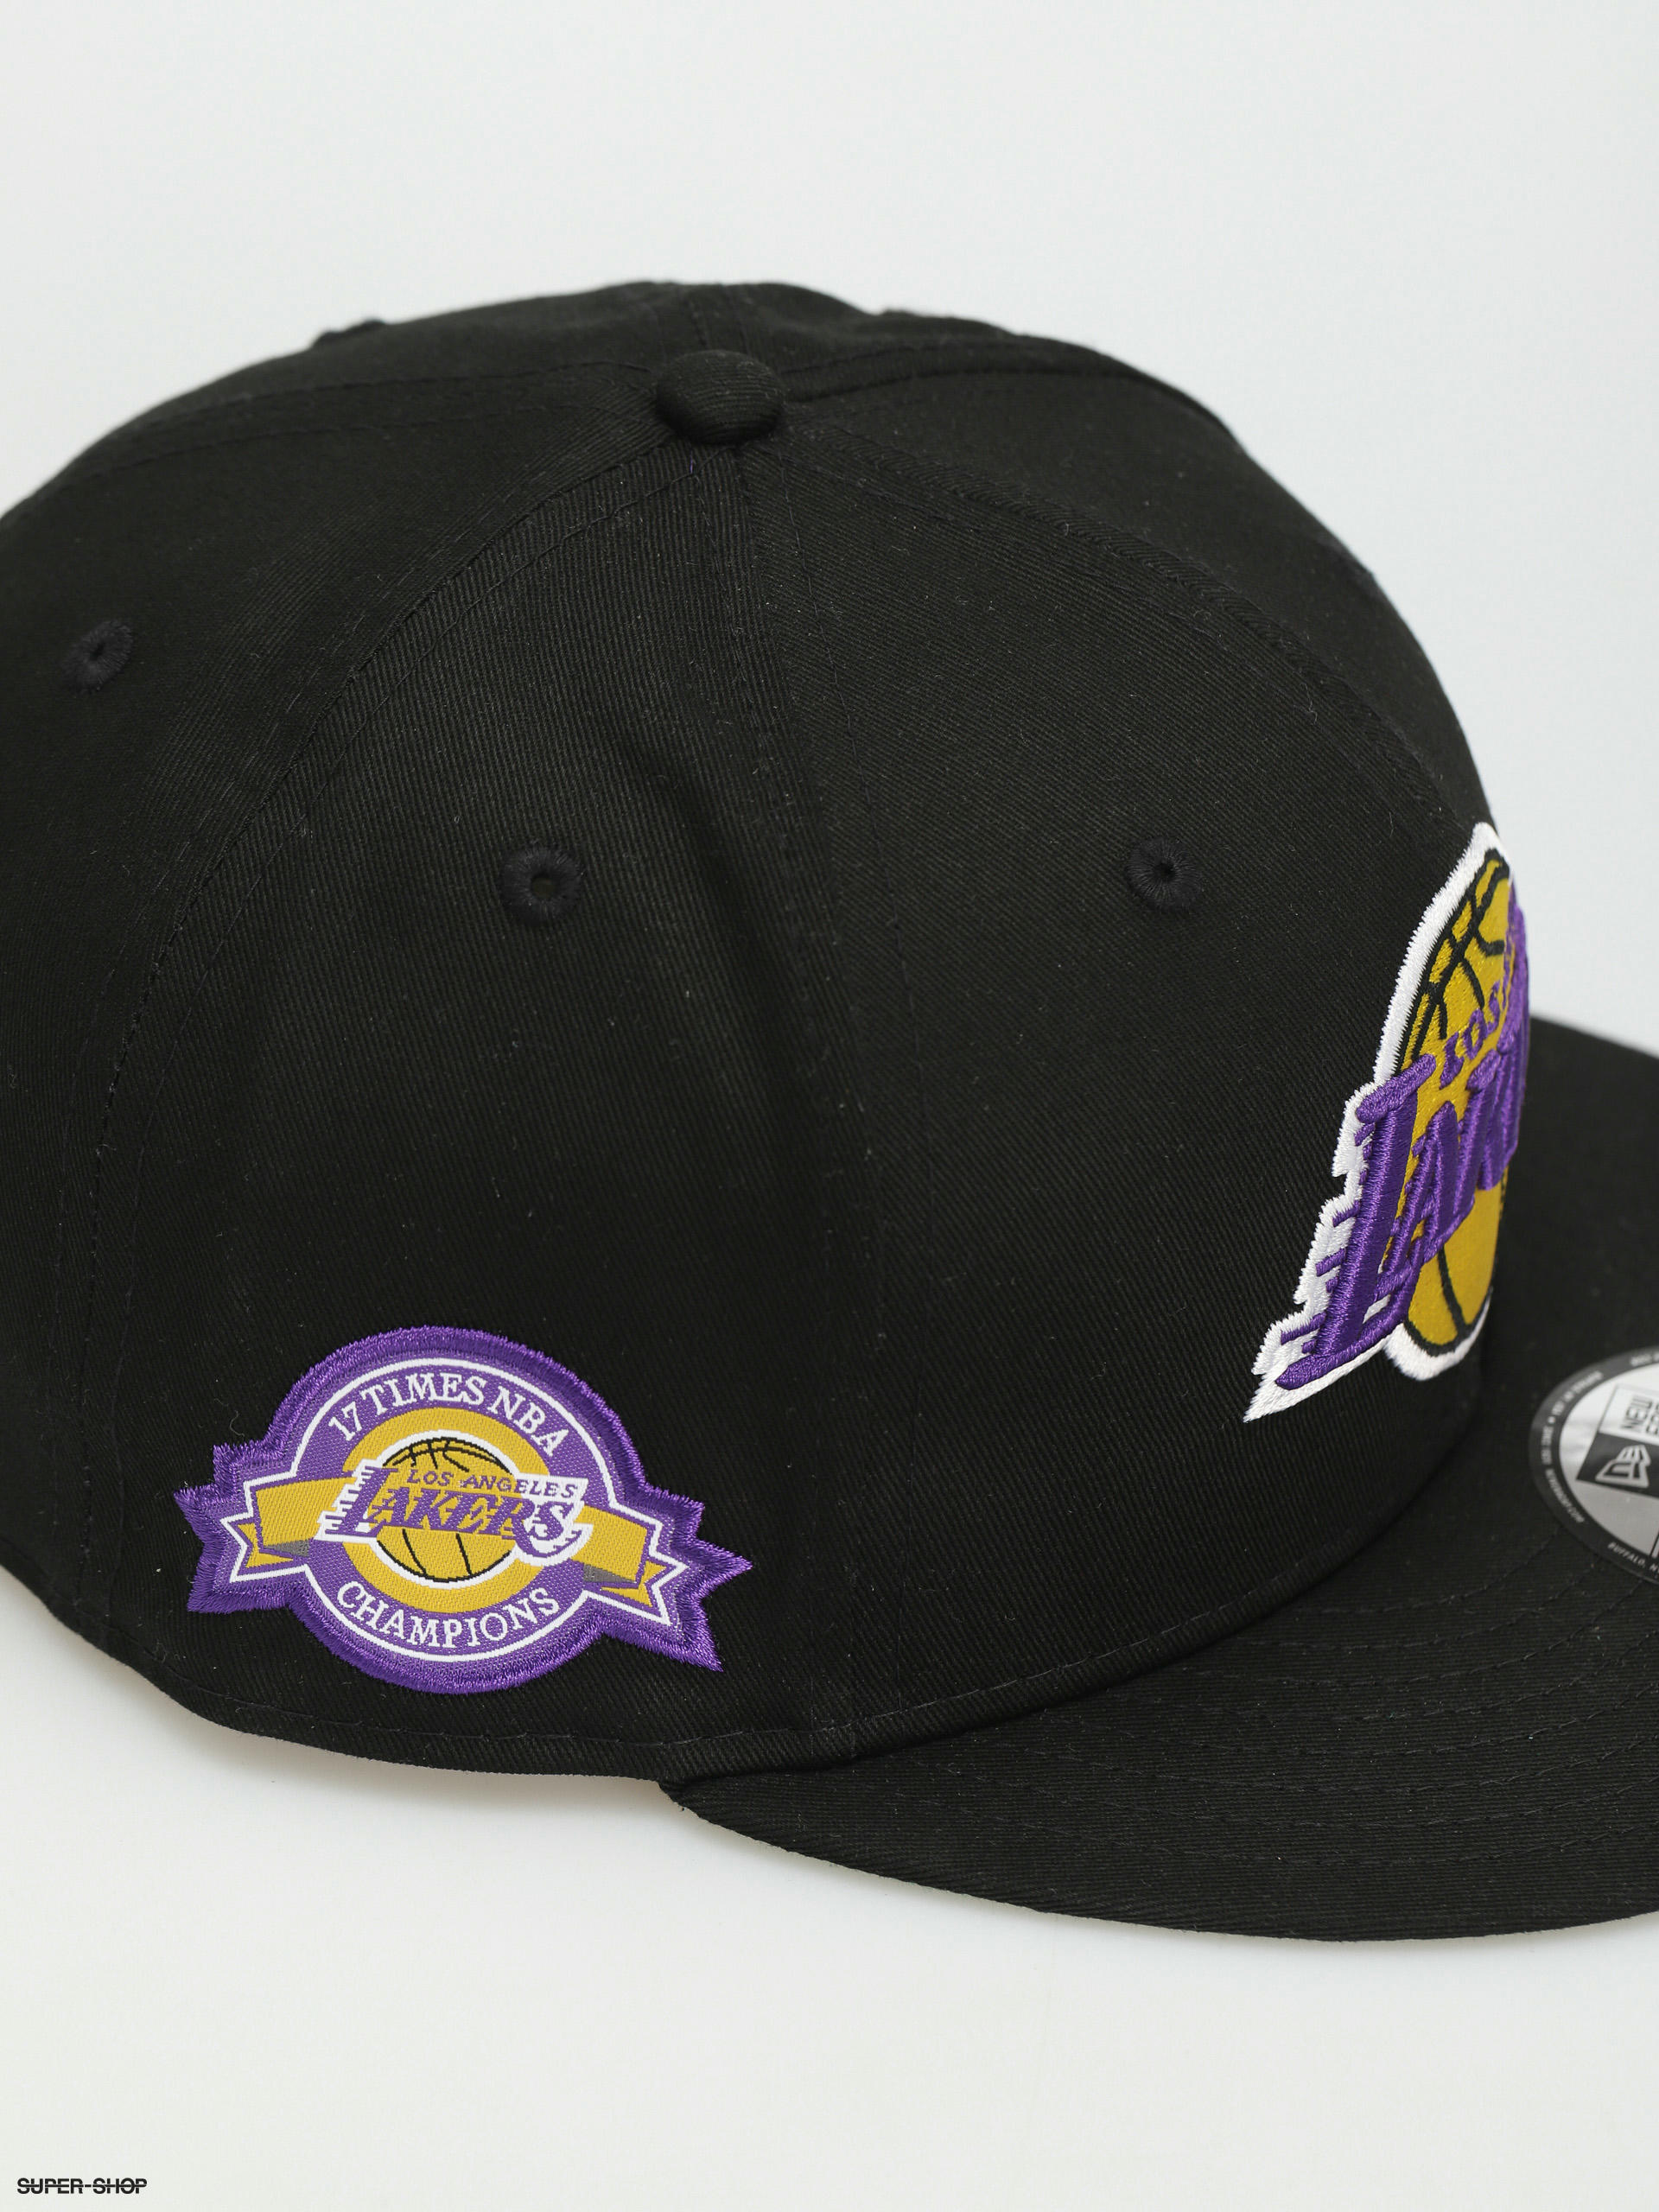 Los Angeles Lakers New Era Black On Black 9FIFTY Snapback Hat